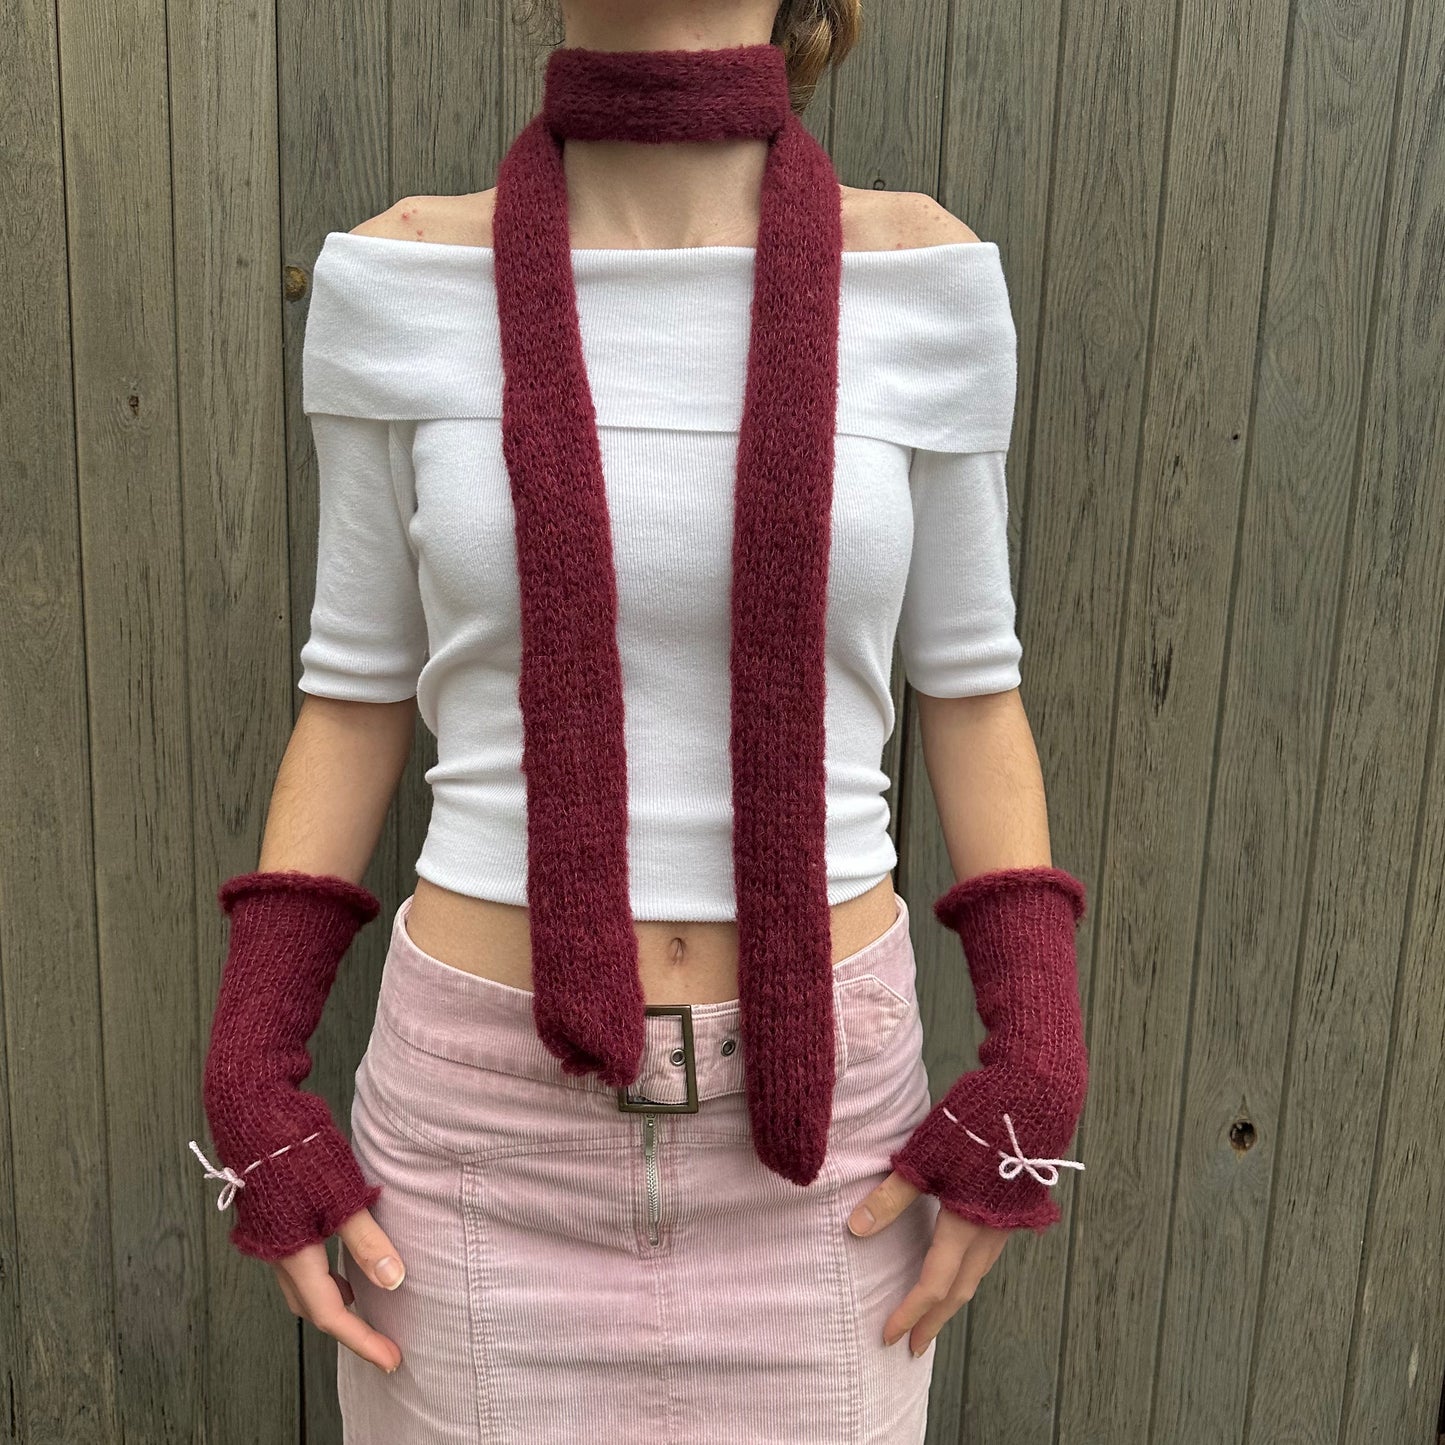 Handmade knitted mohair skinny scarf in burgundy